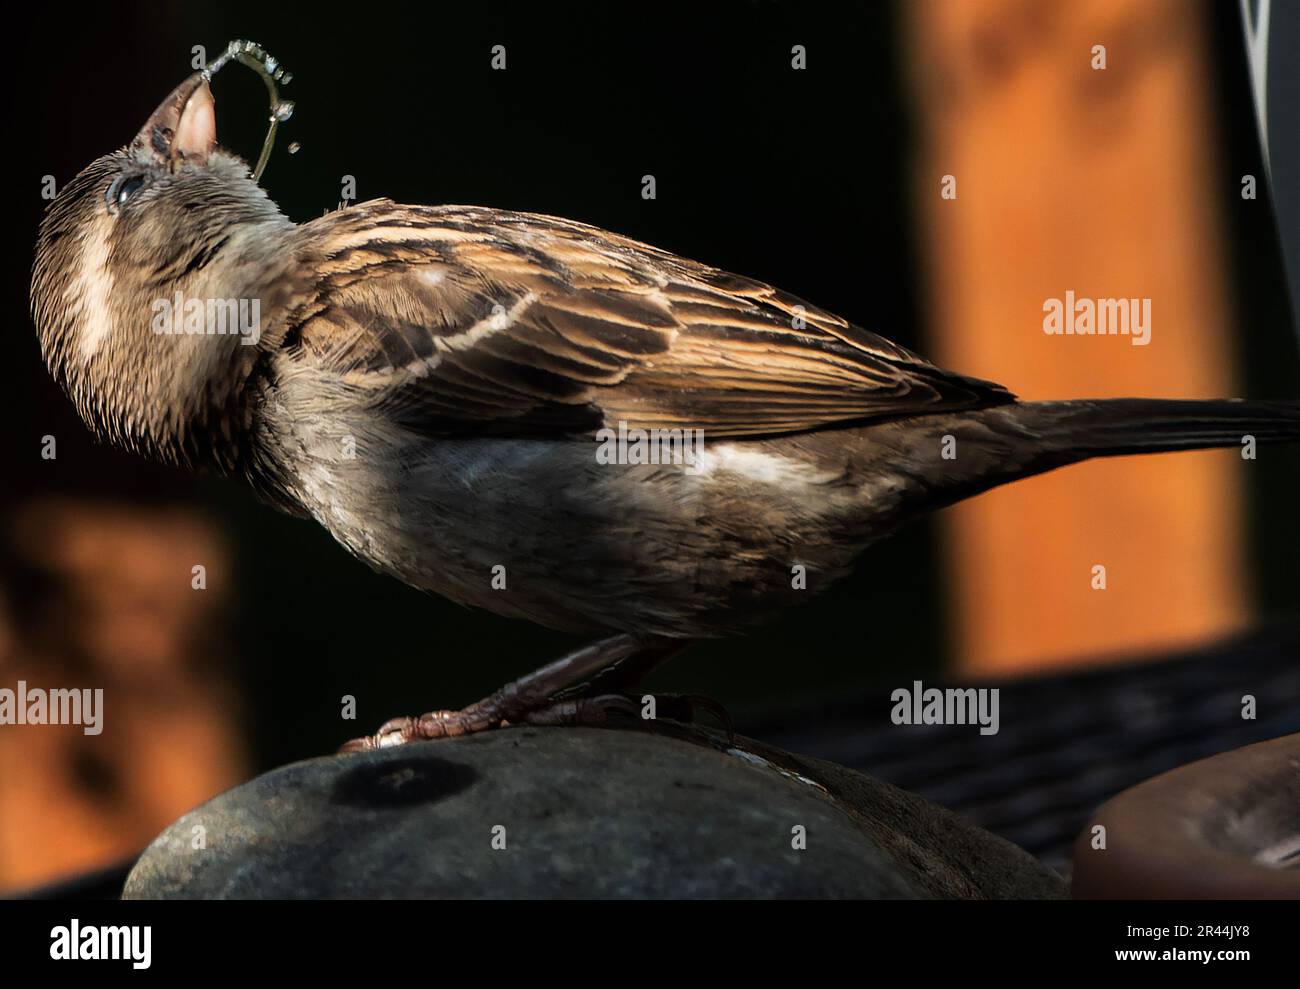 A small Sparrow on the bird feeder Stock Photo